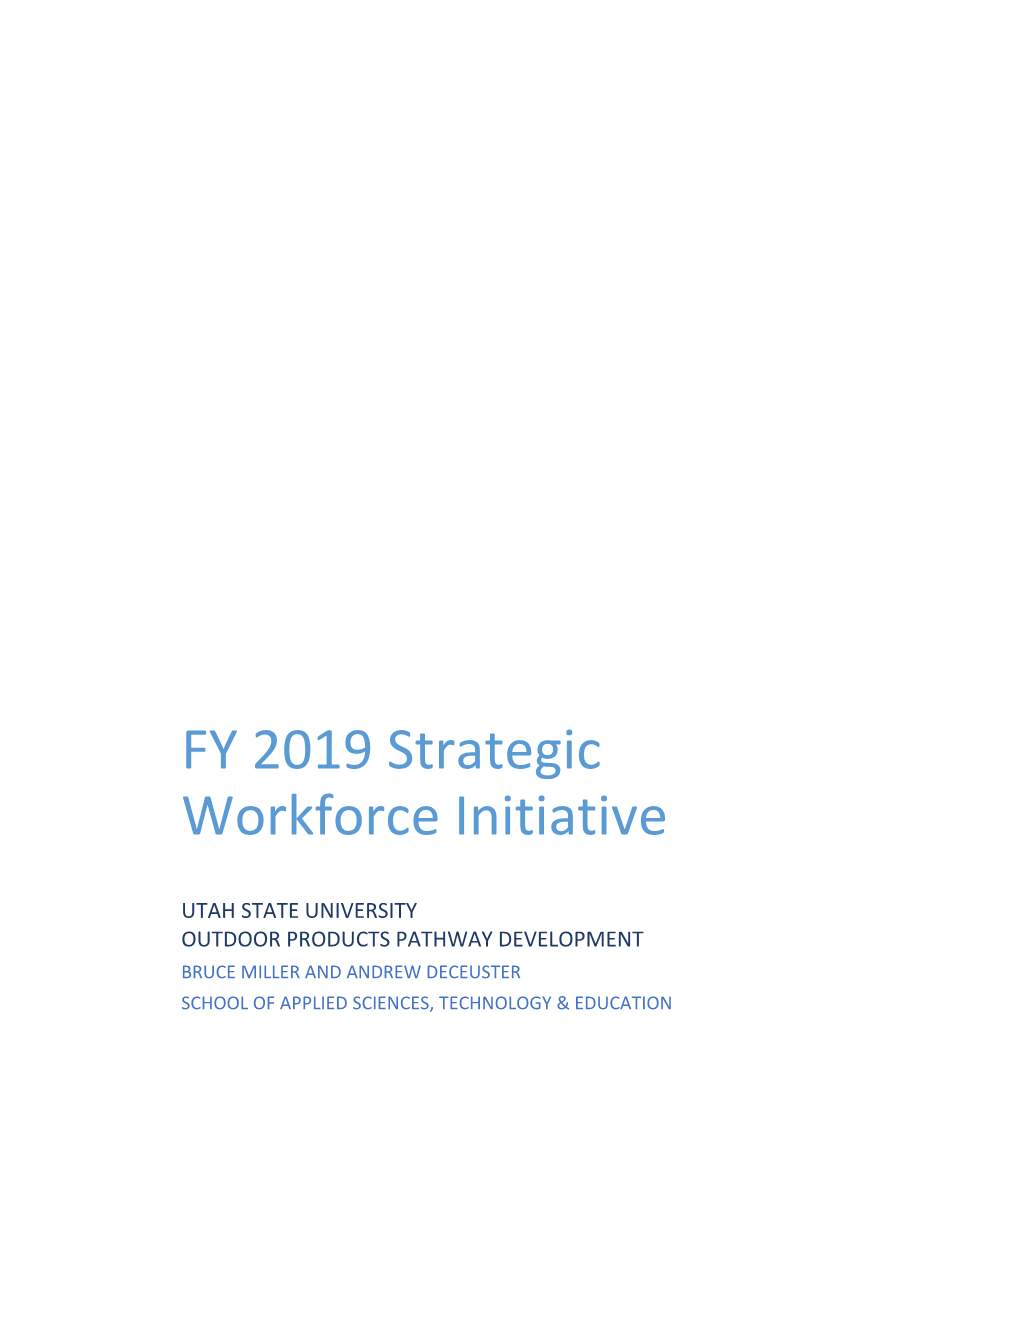 FY 2019 Strategic Workforce Initiative